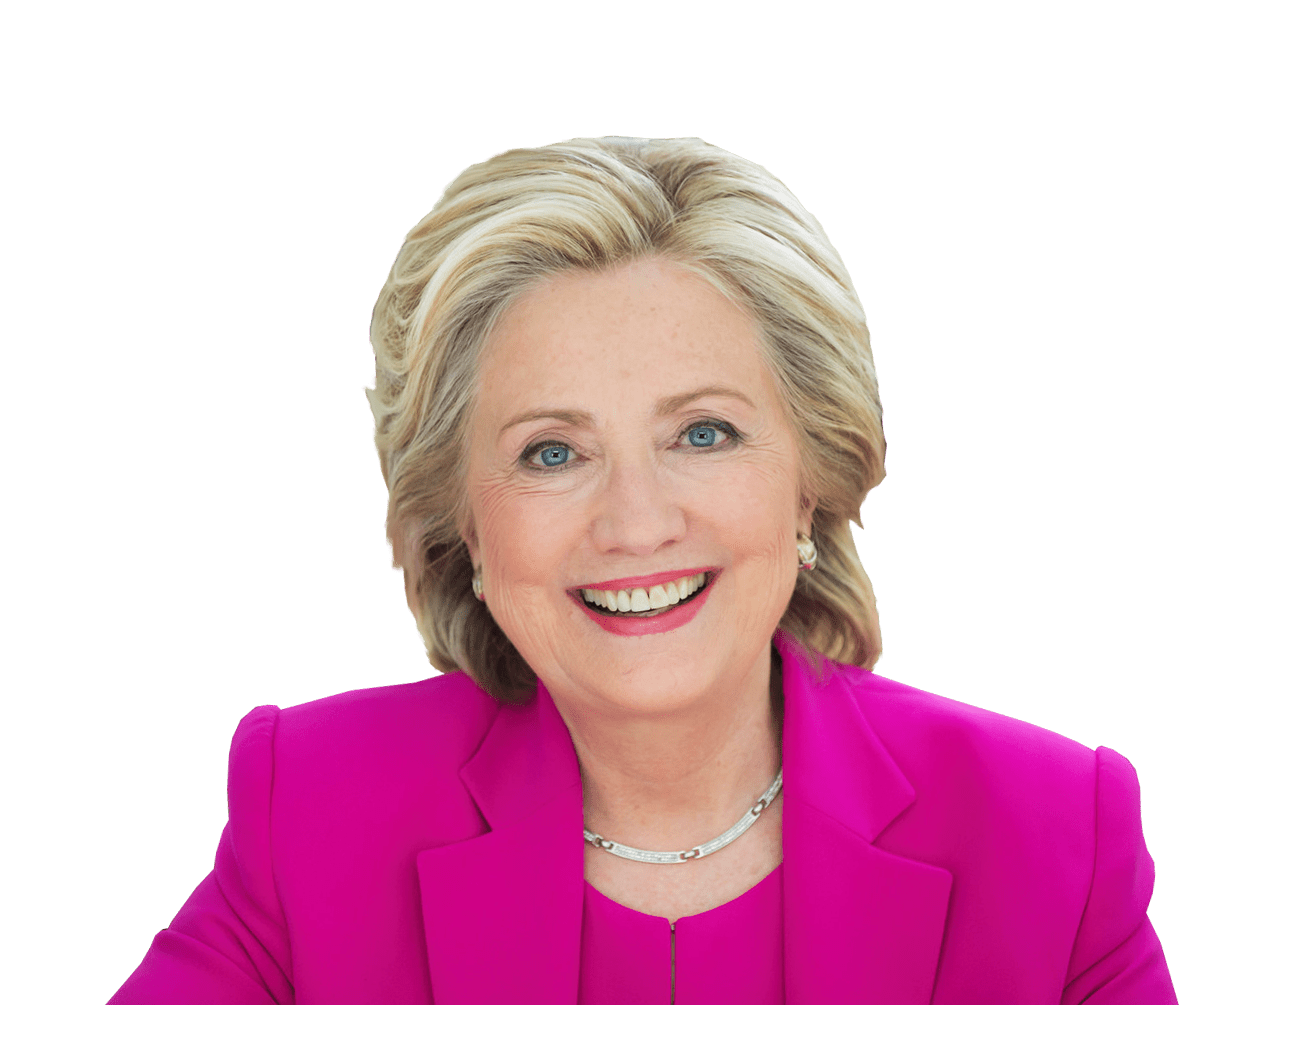 Hillary Clinton PNG Image in Transparent pngteam.com